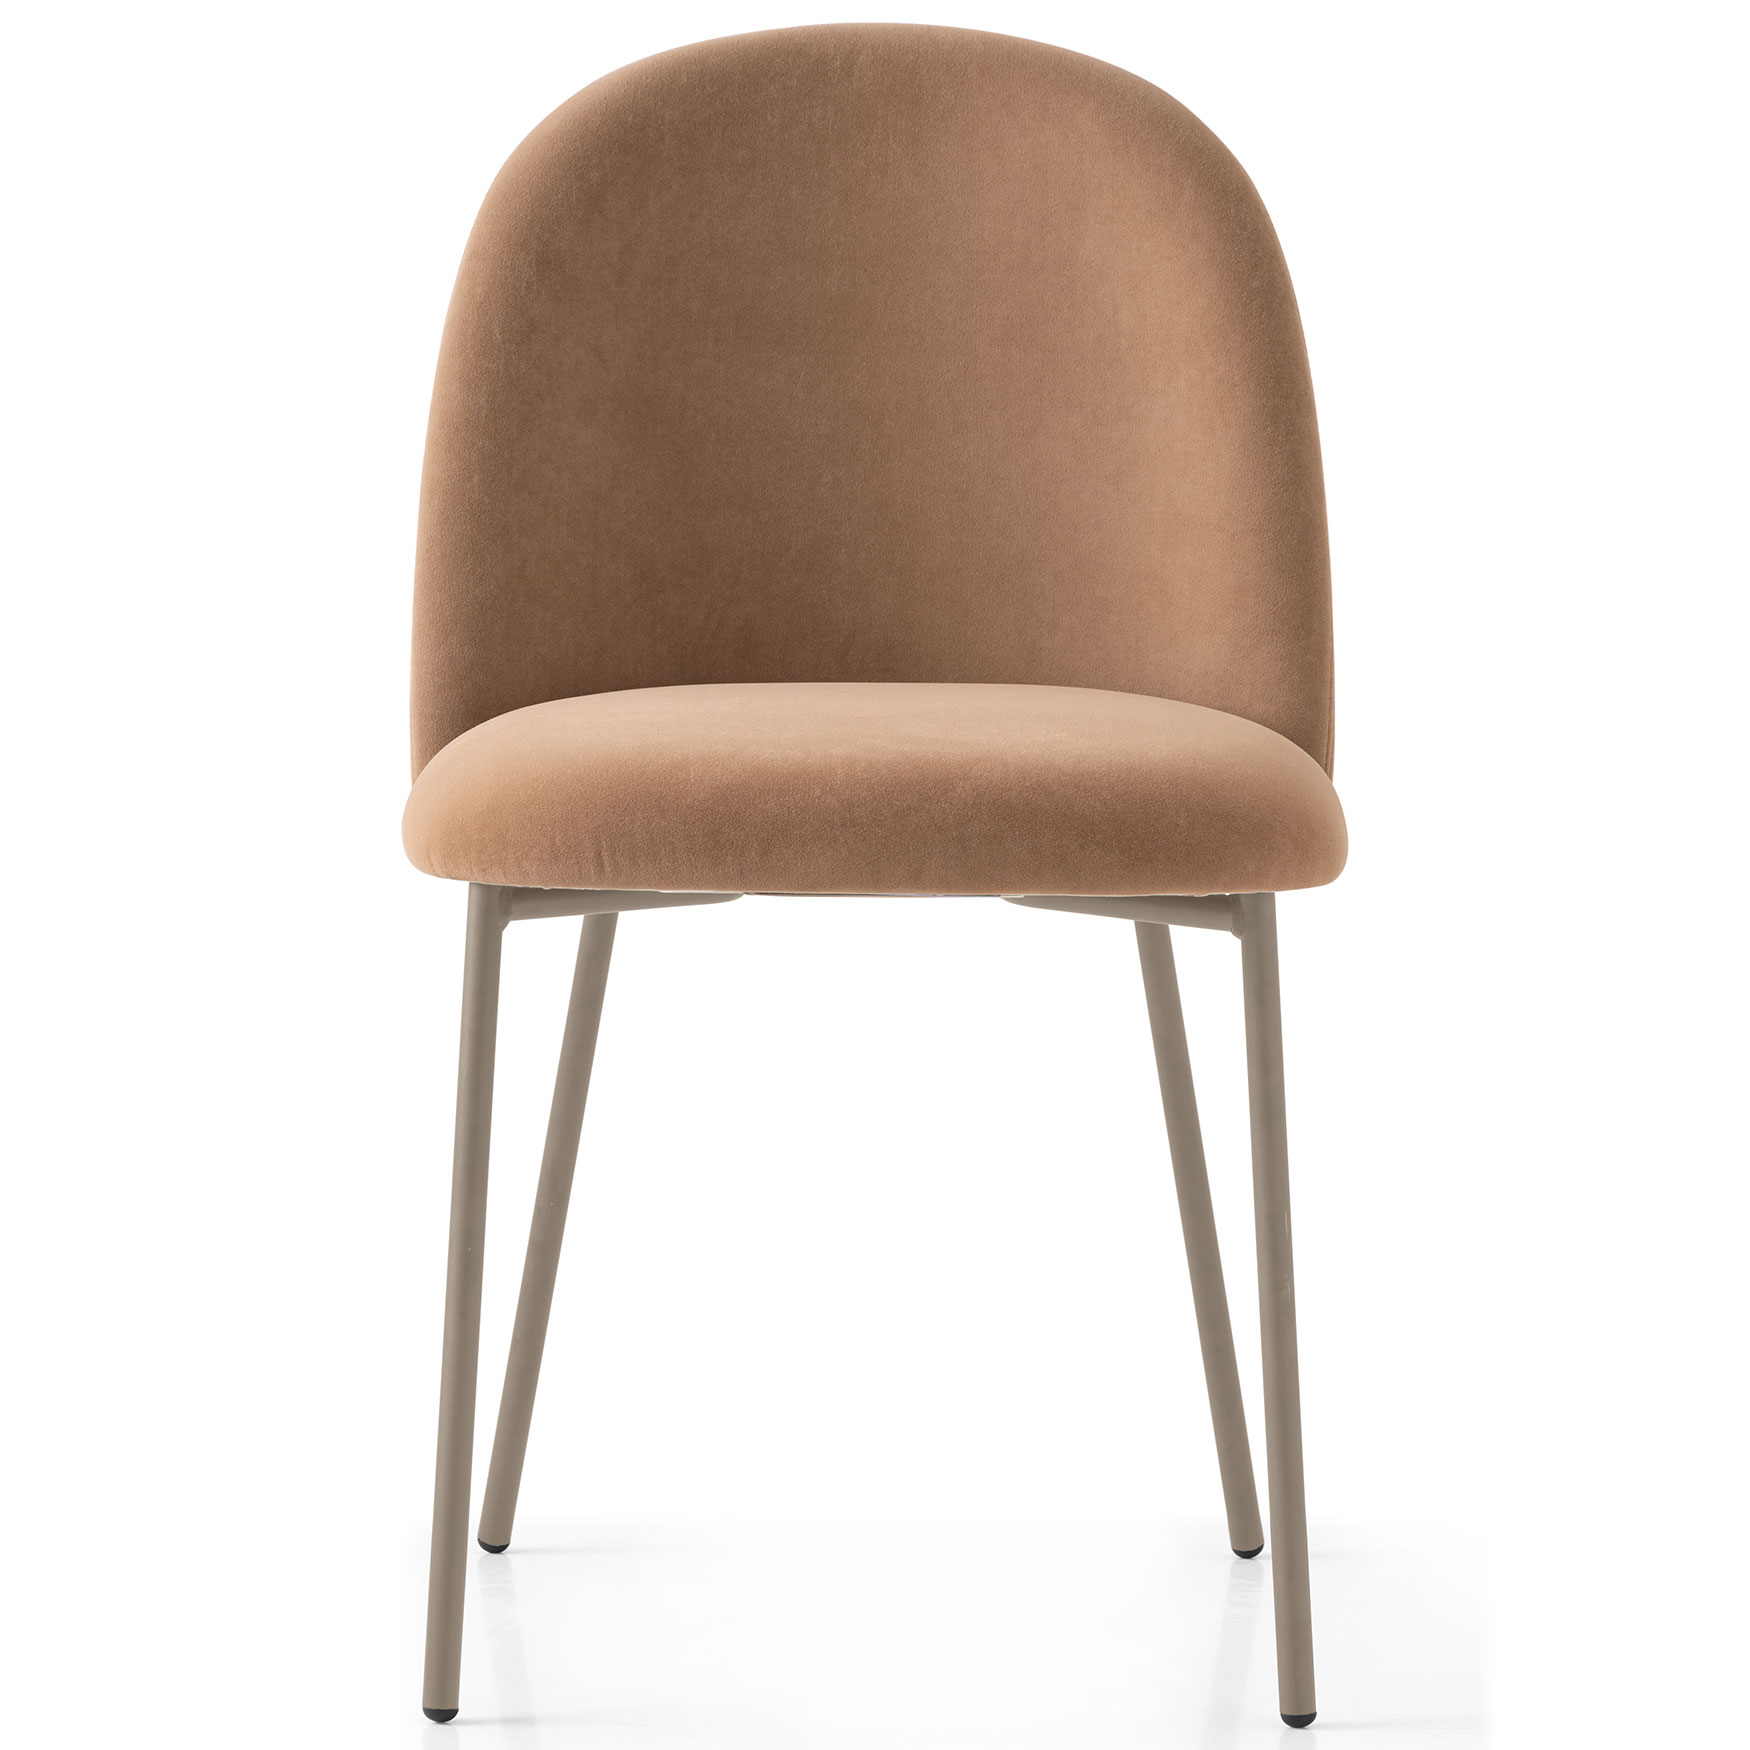 Tuka Chair by Connubia | CB1993000176SLM00000000 | CON1086544